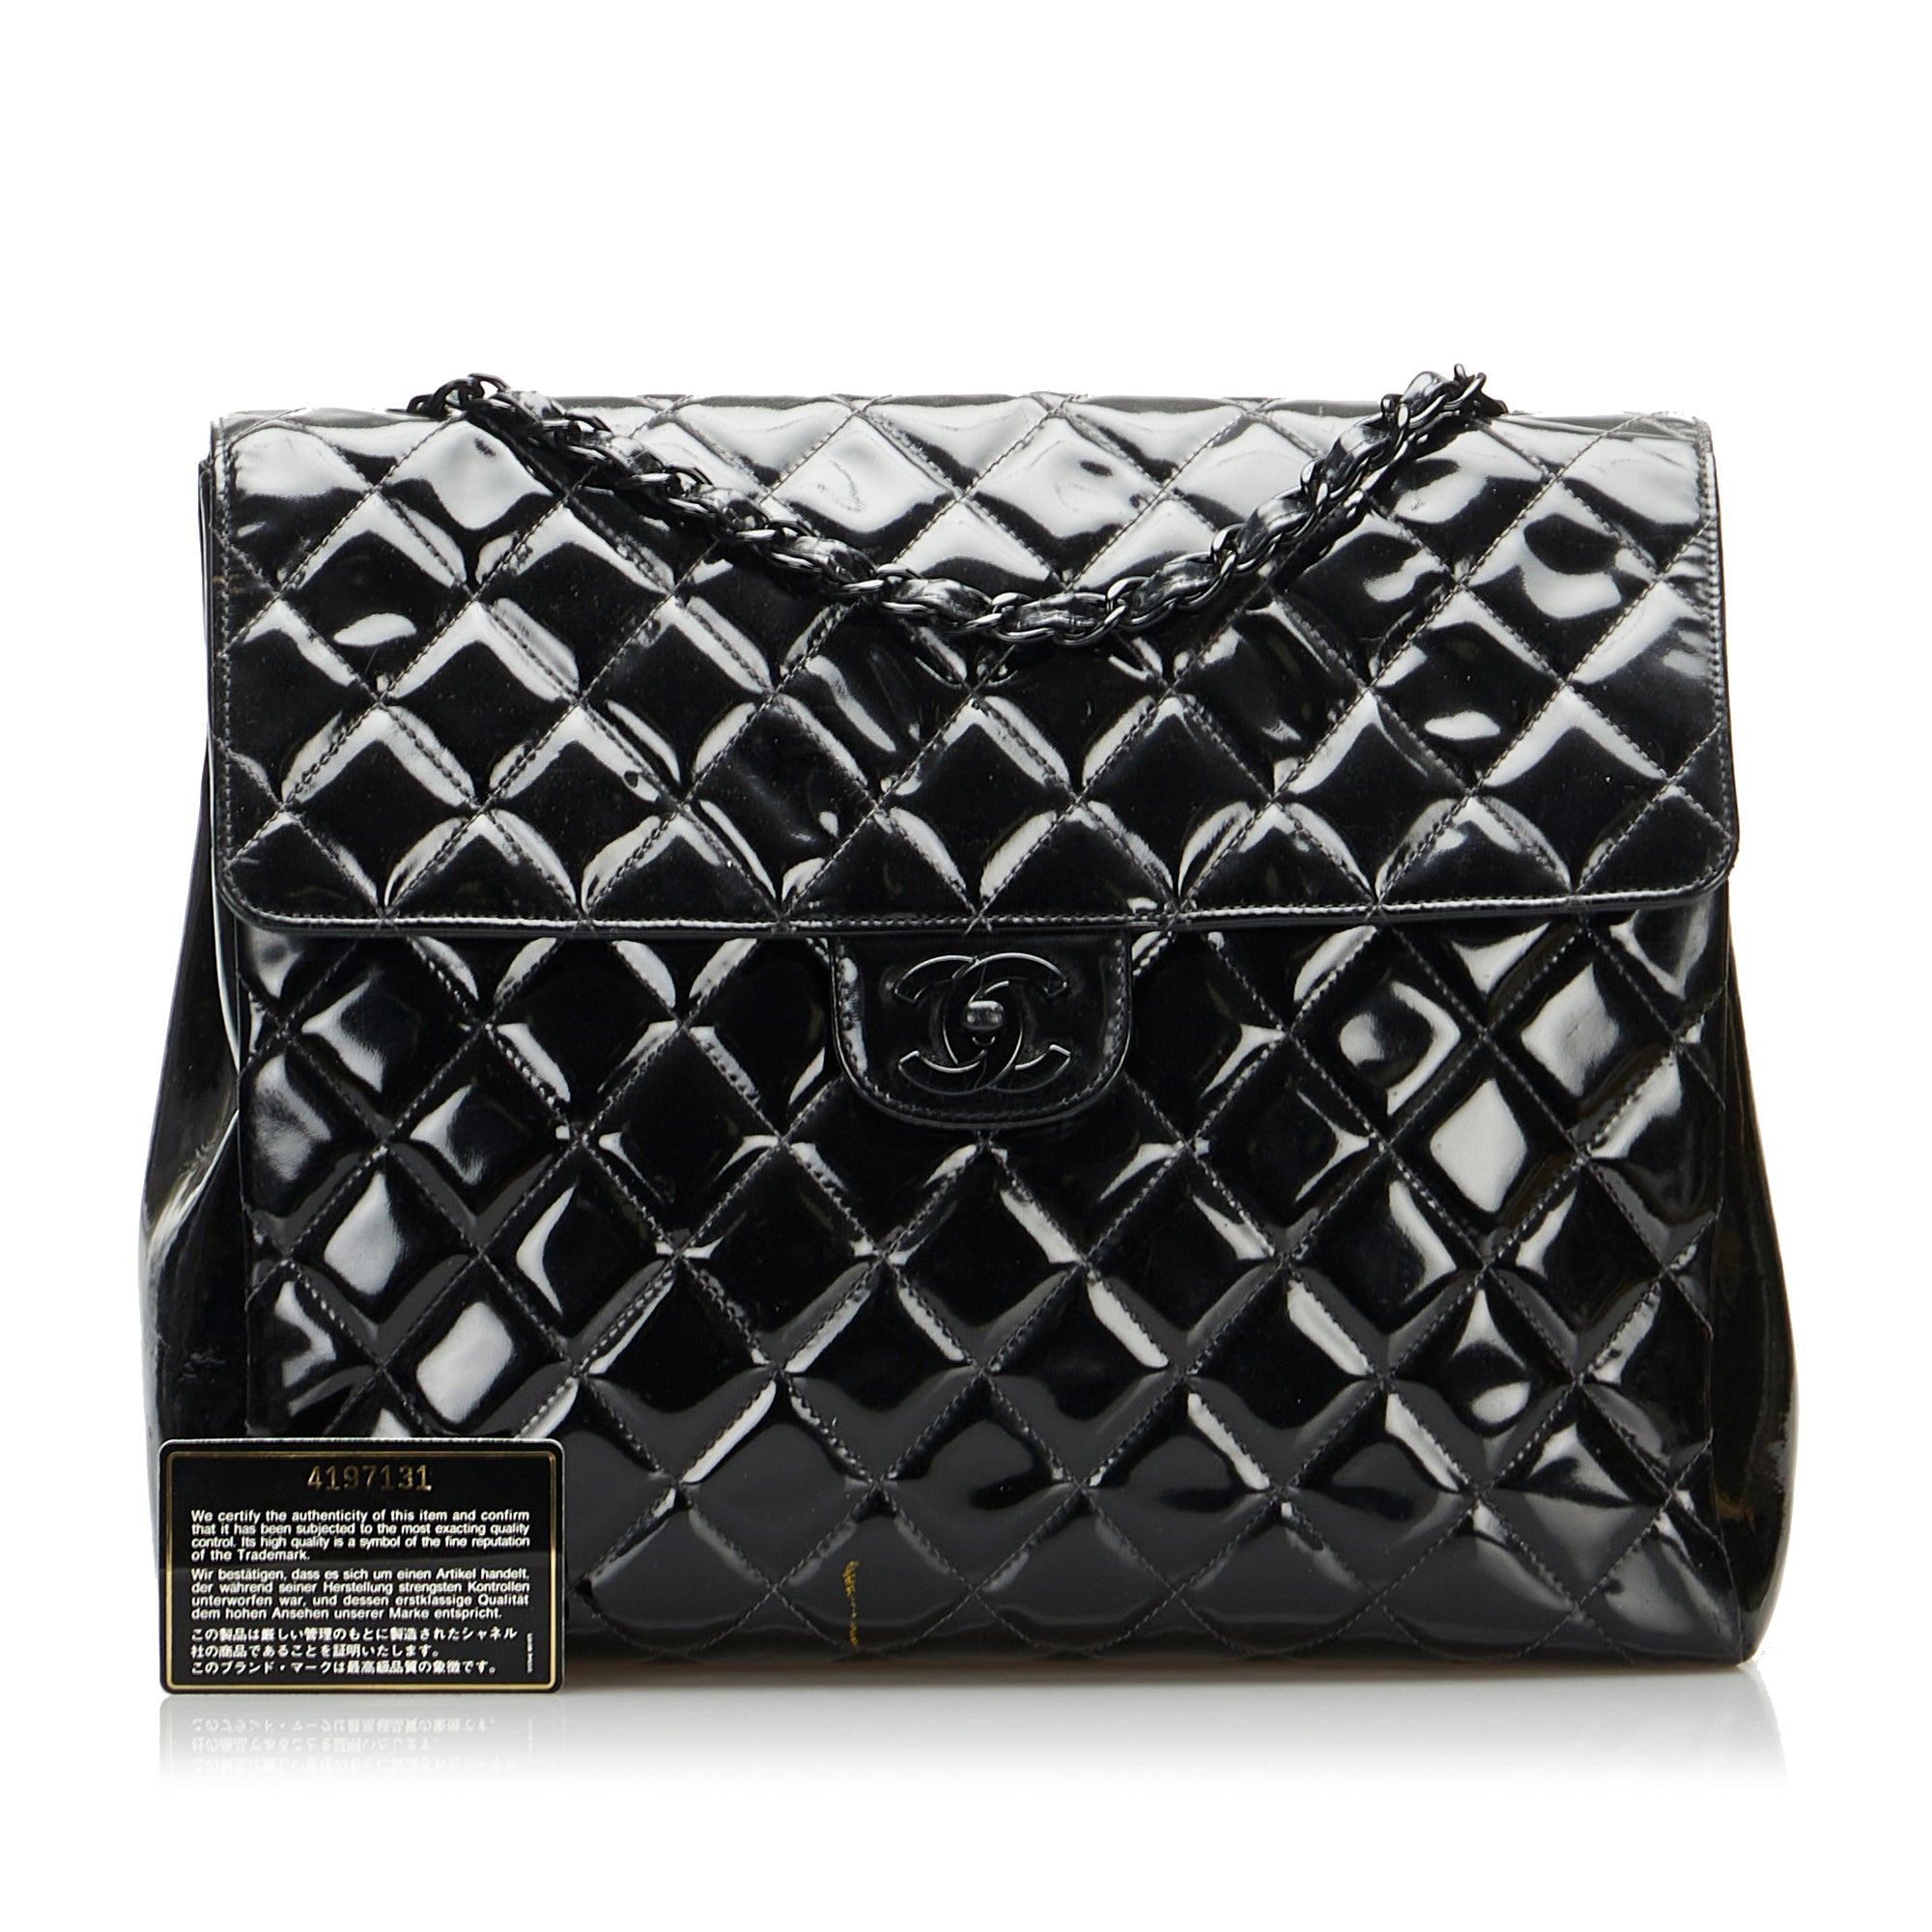 Black Chanel So Black Matelasse Patent Leather Single Flap Bag, Cra-wallonieShops Revival